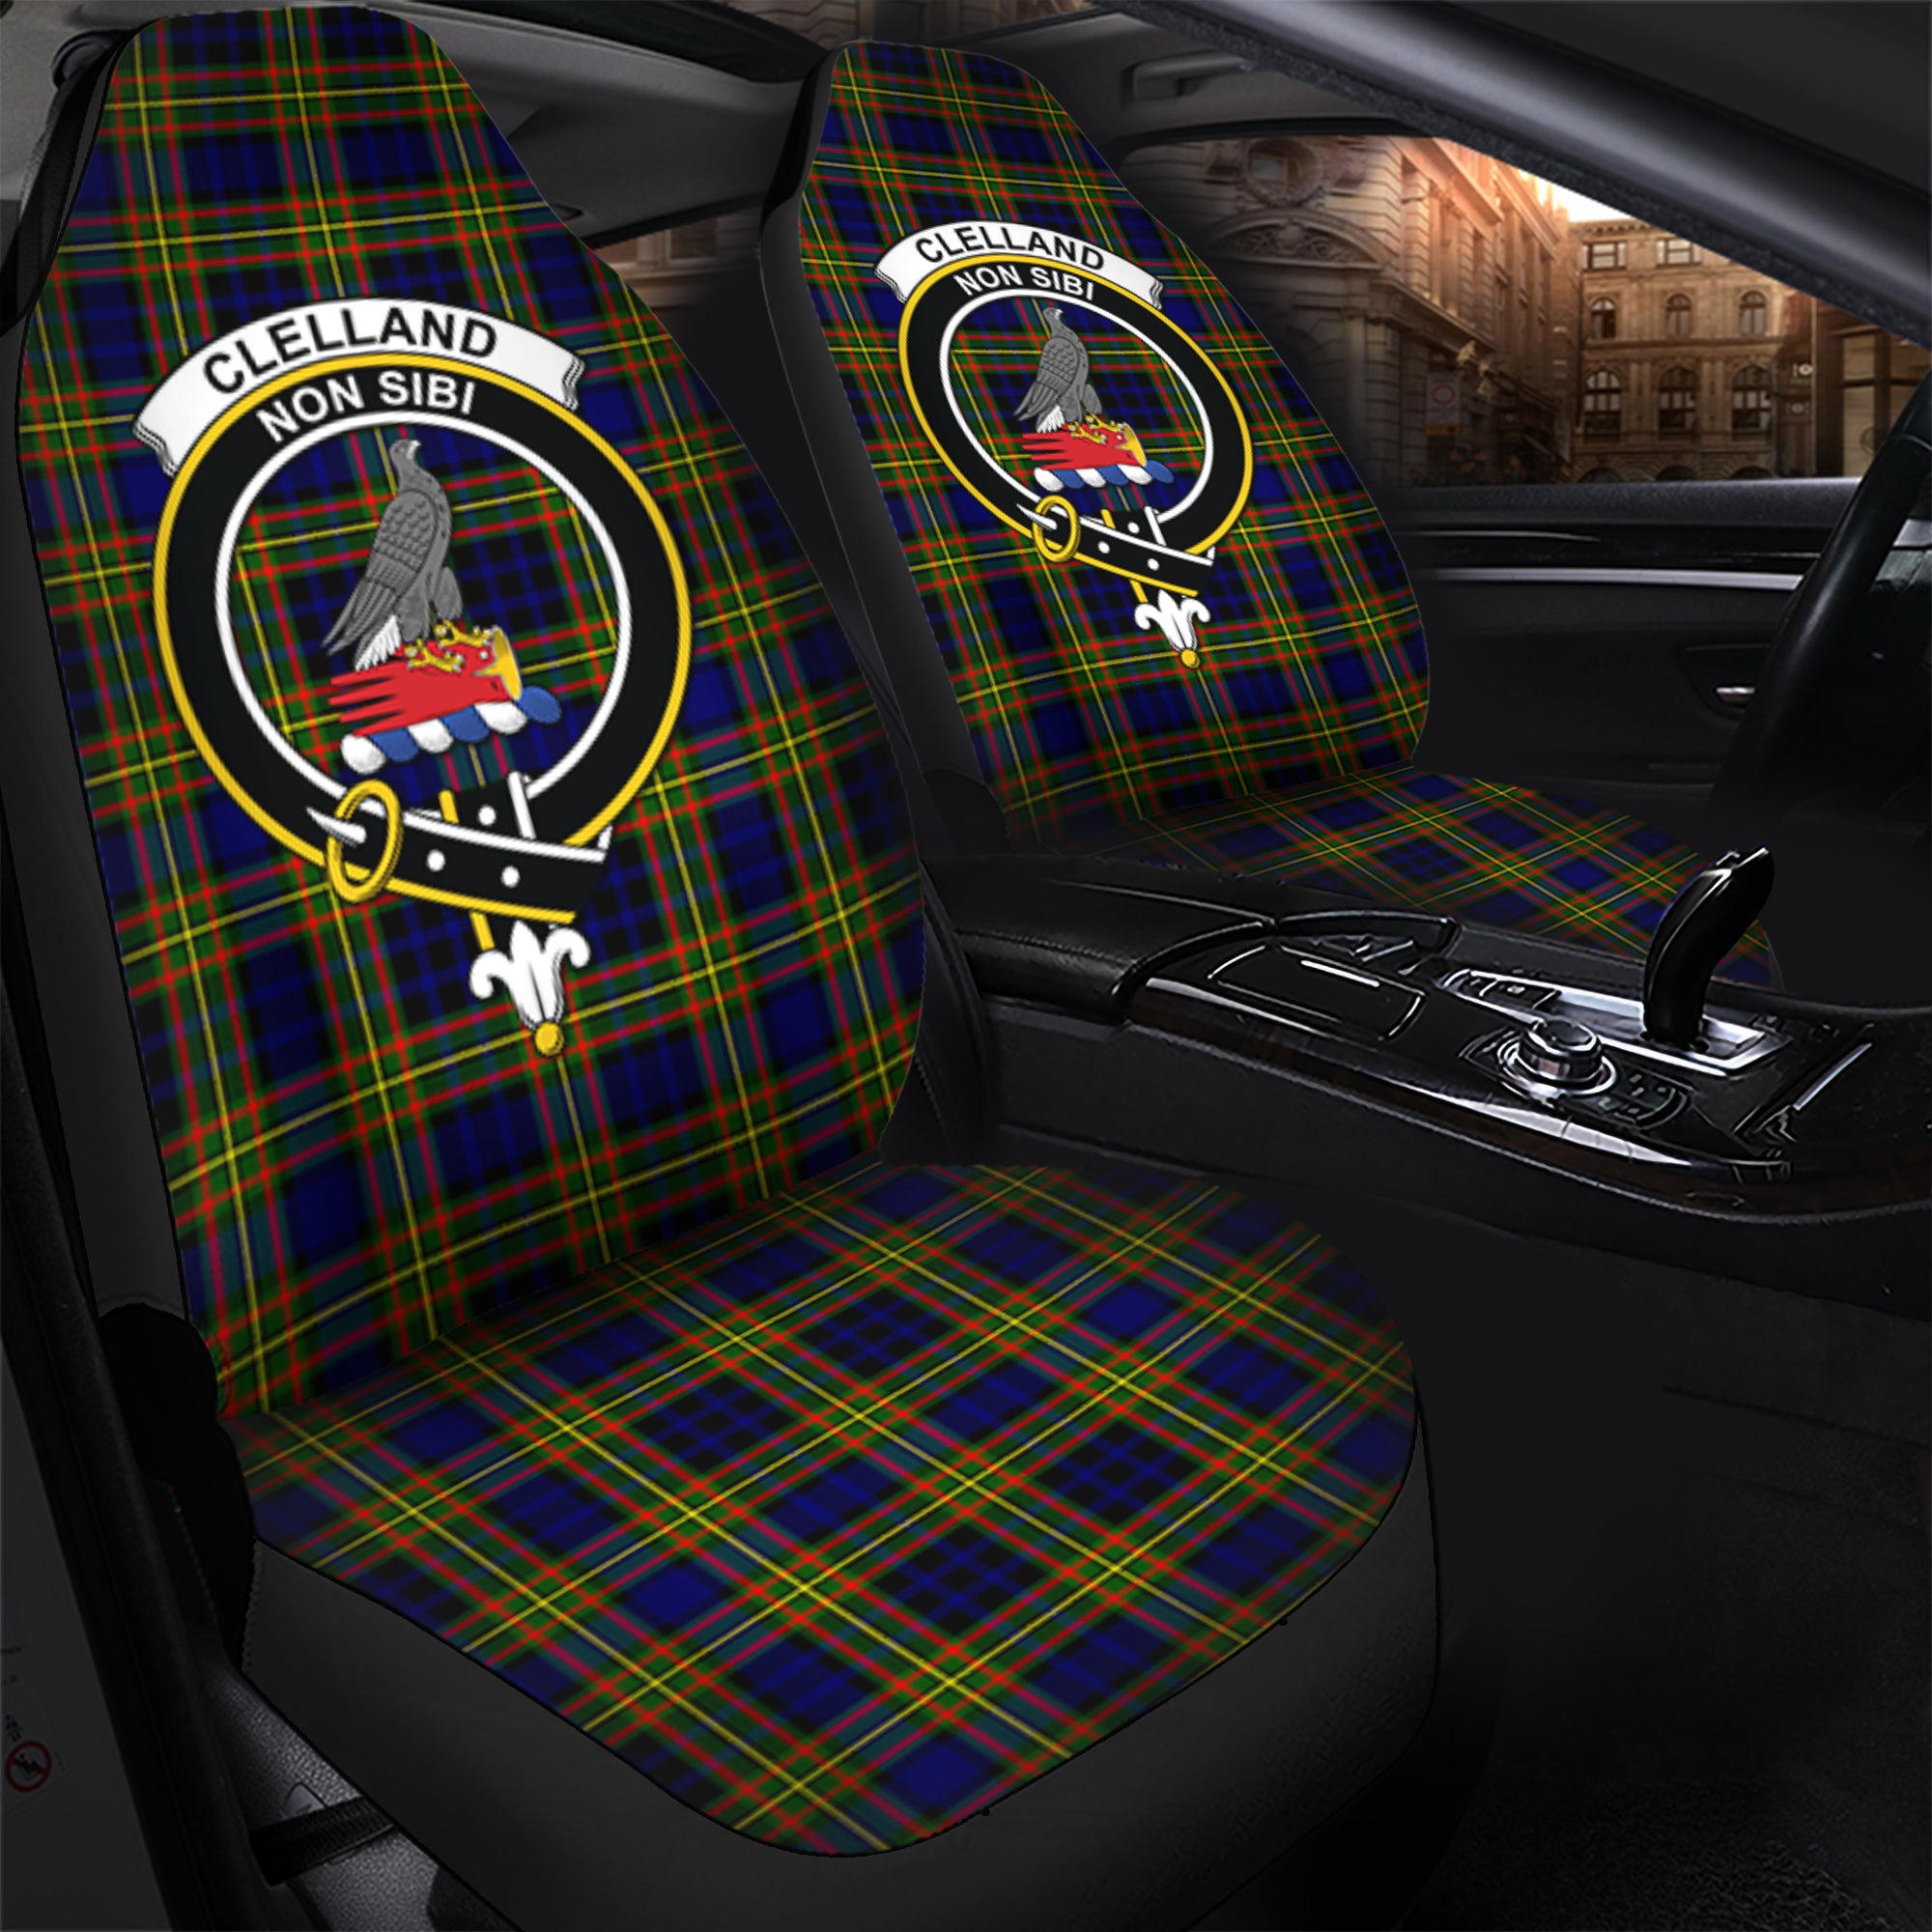 Clelland Modern Clan Tartan Car Seat Cover, Family Crest Tartan Seat Cover TS23